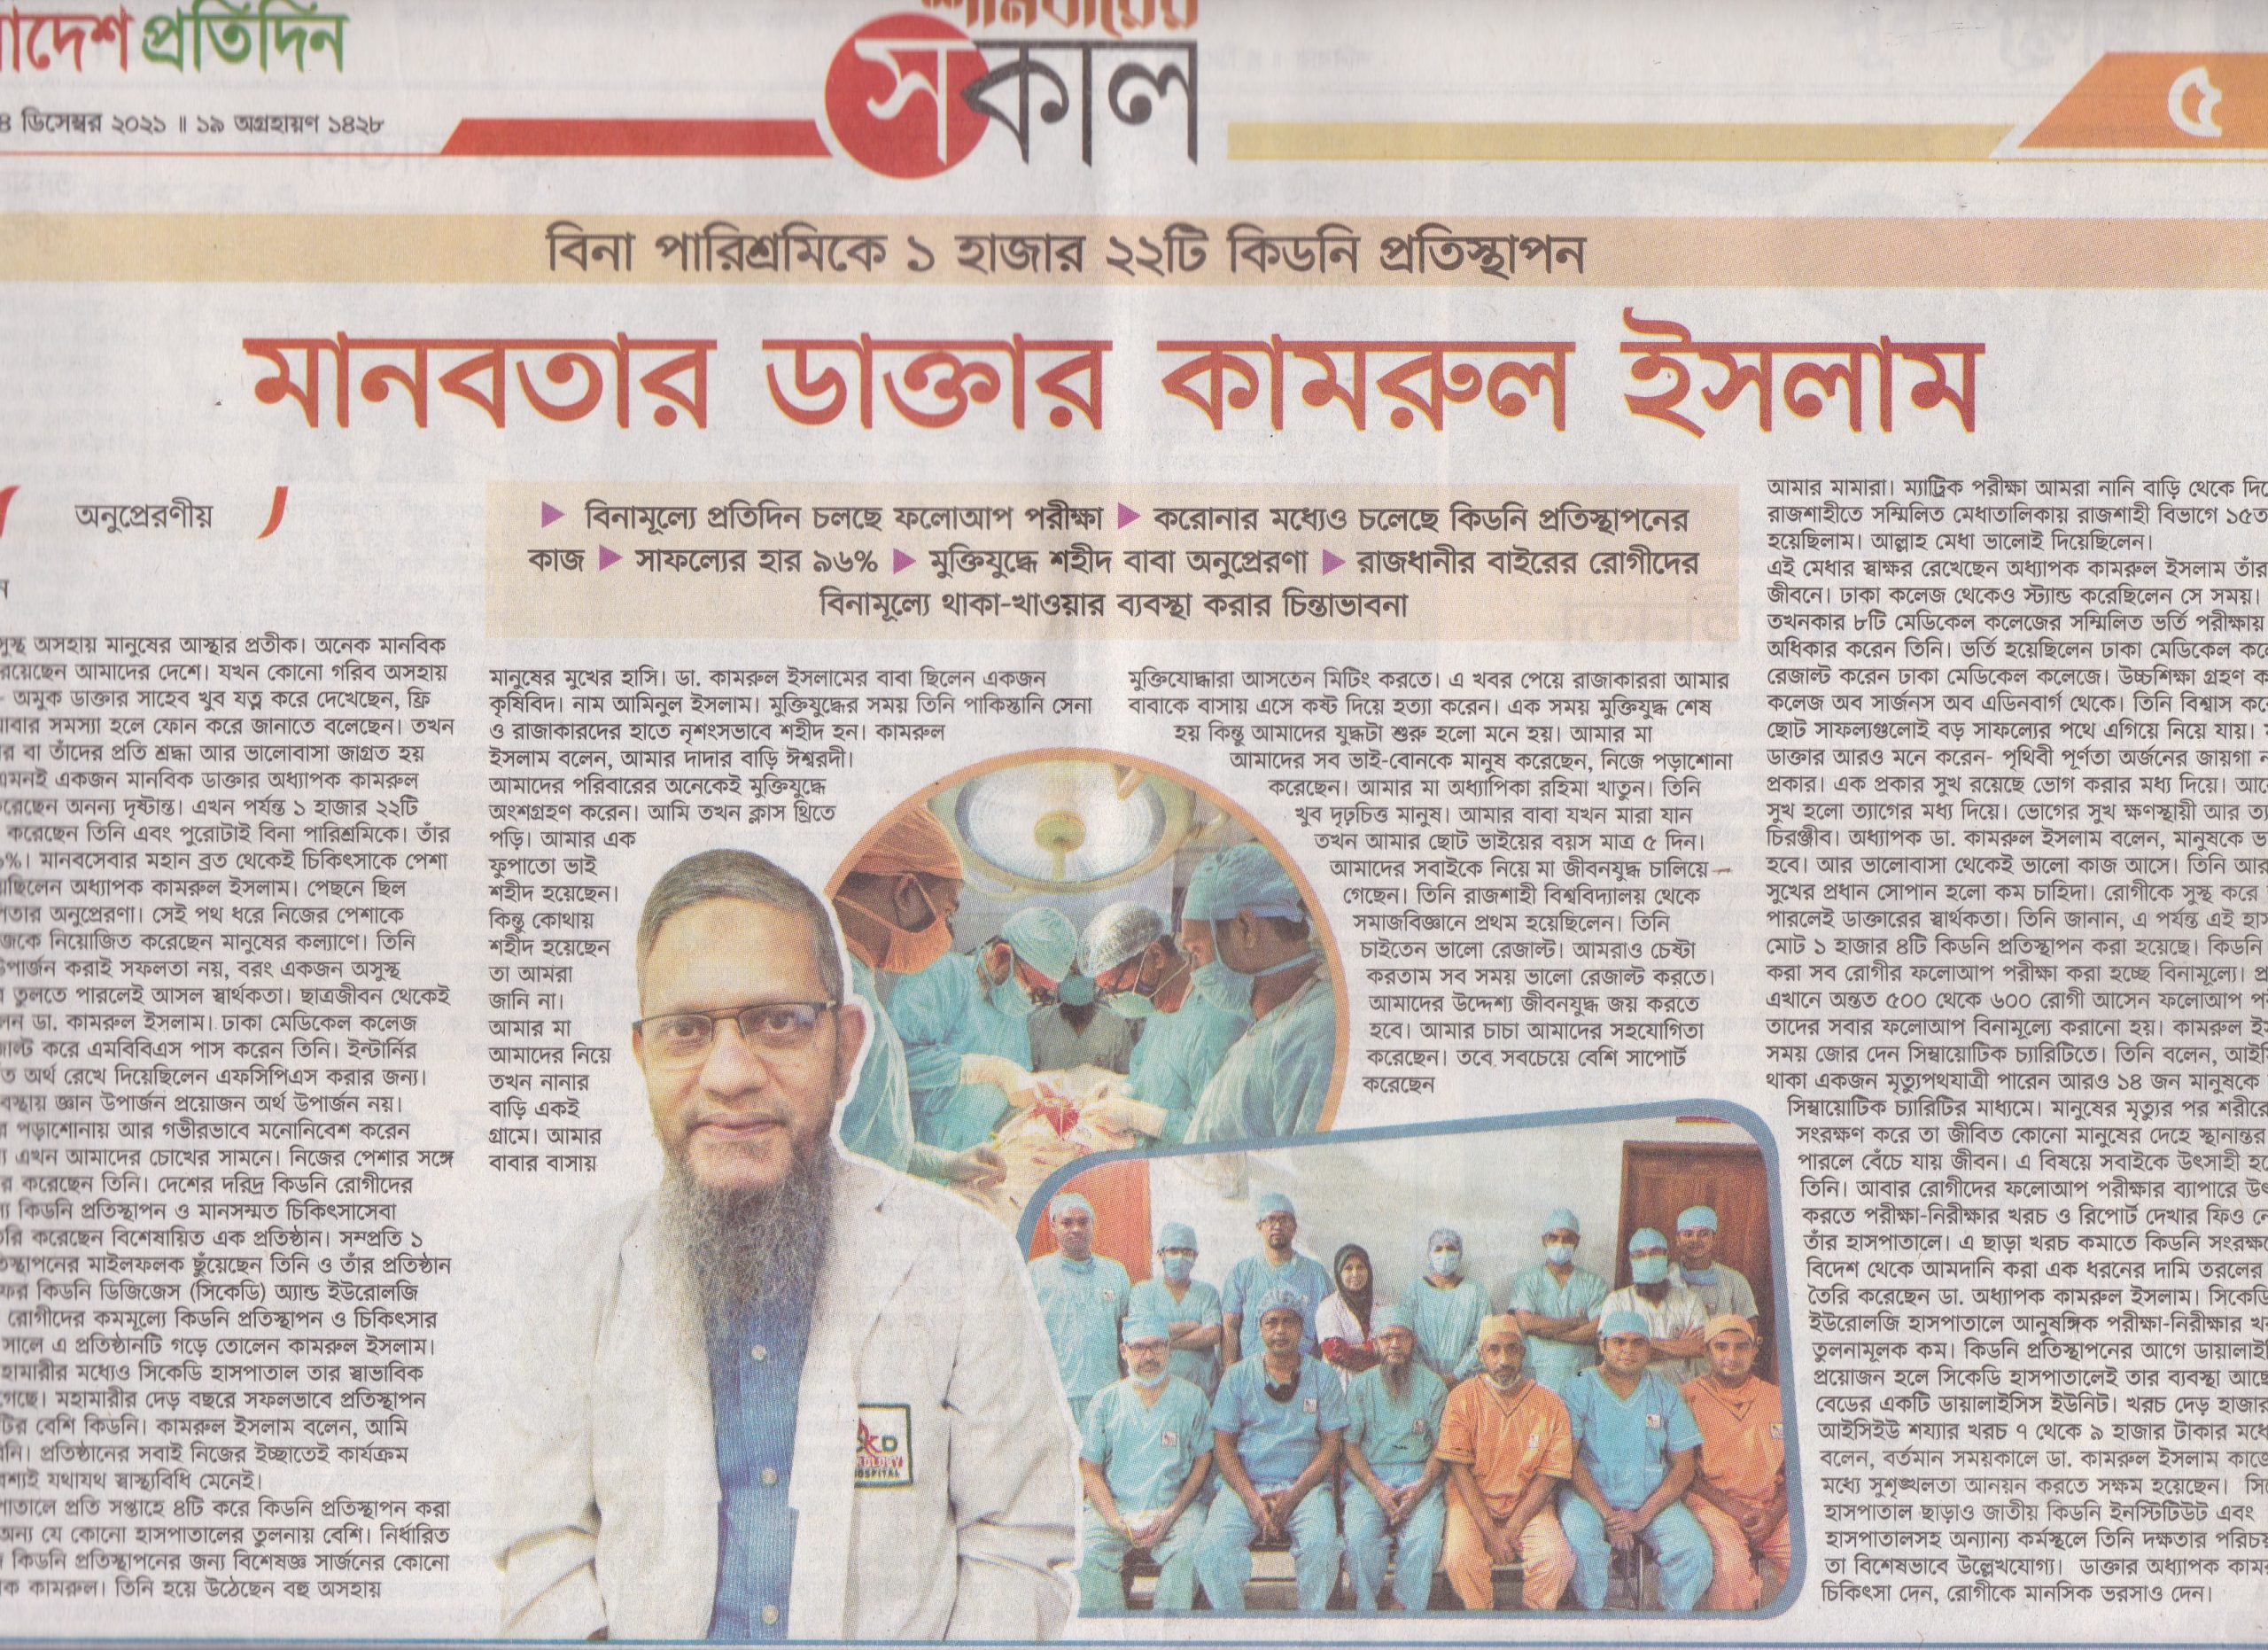 Kidney transplant done by dr kamrul islam